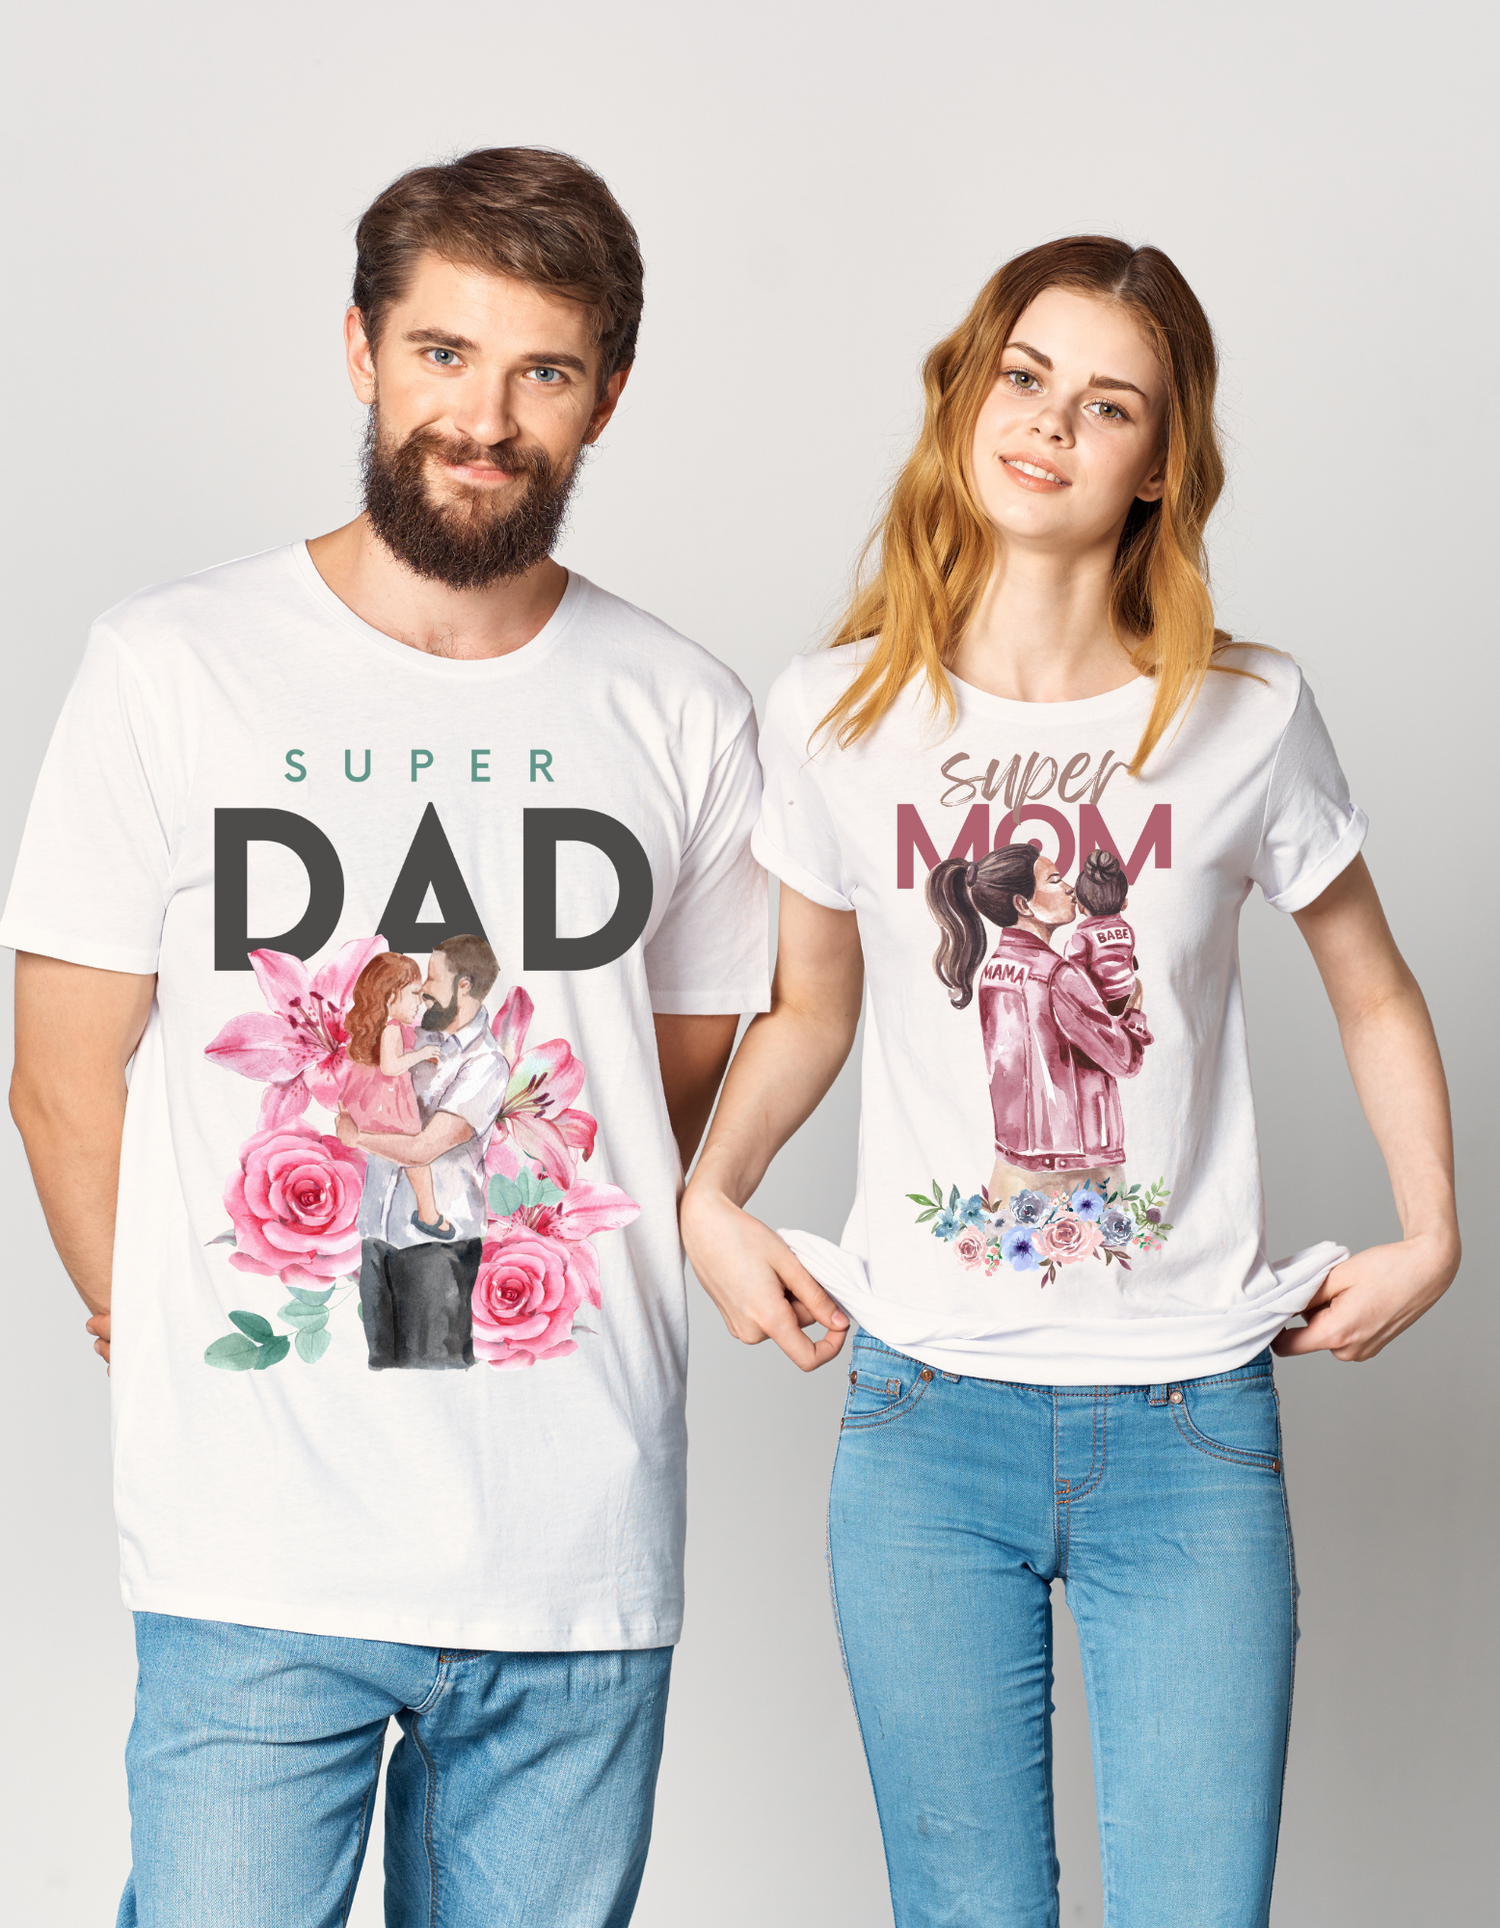 Mom & Dad T-Shirts